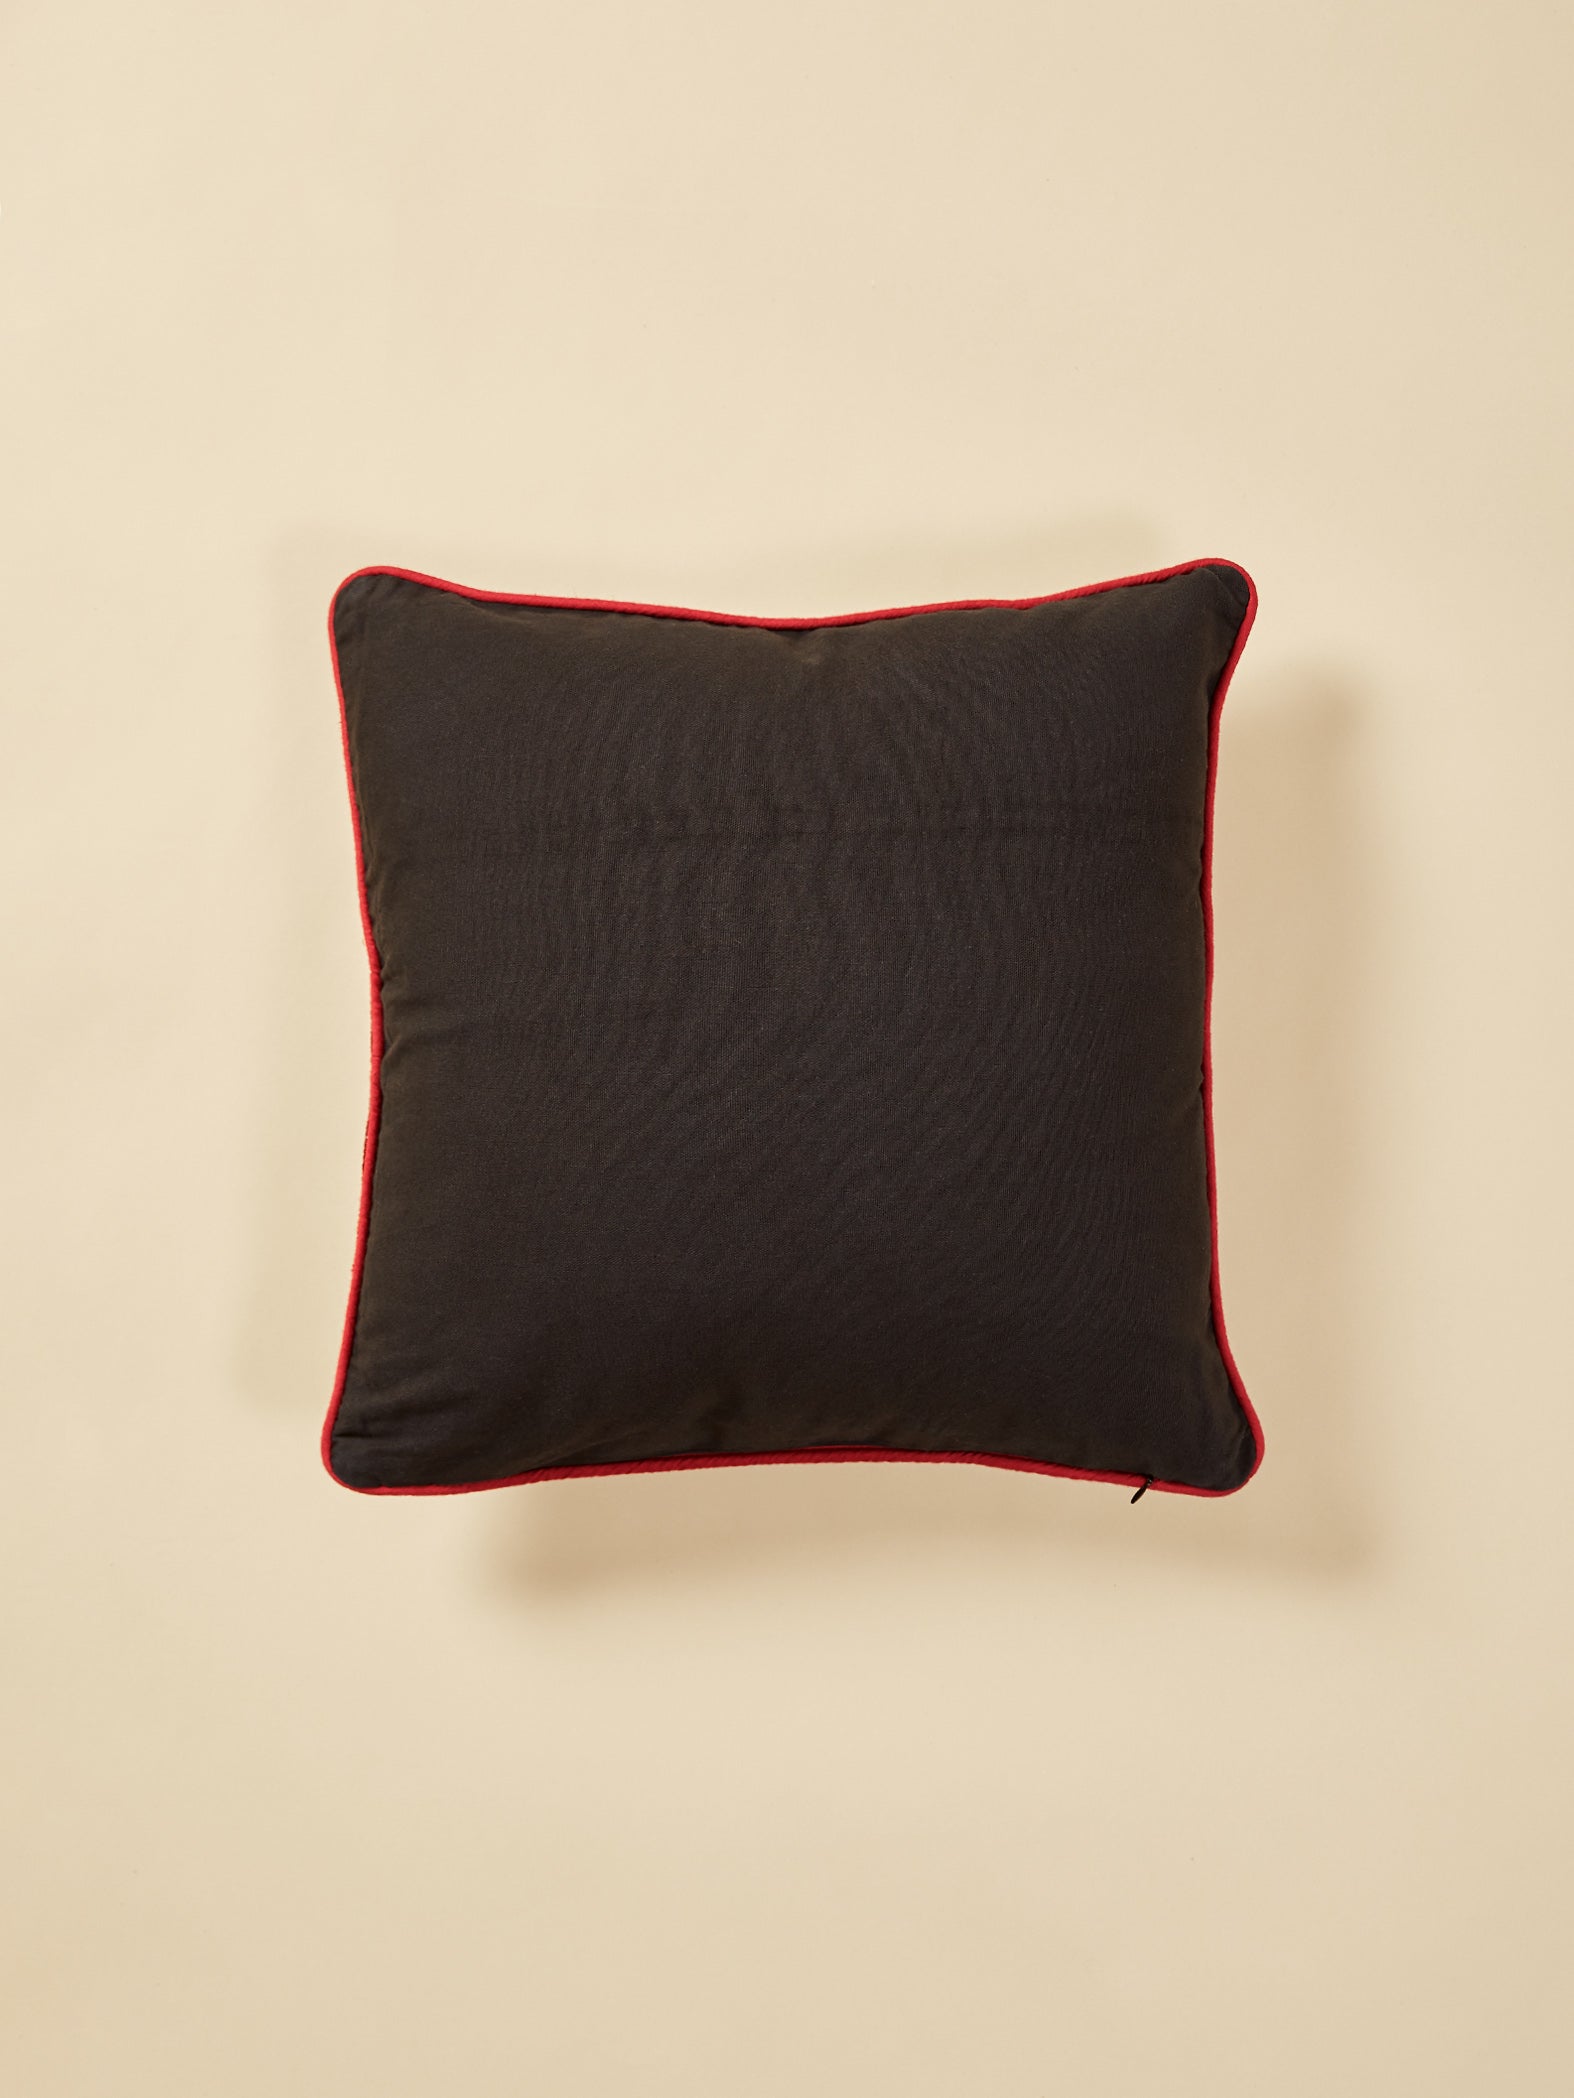 Damask Cotton Piping Cushion Cover Medium